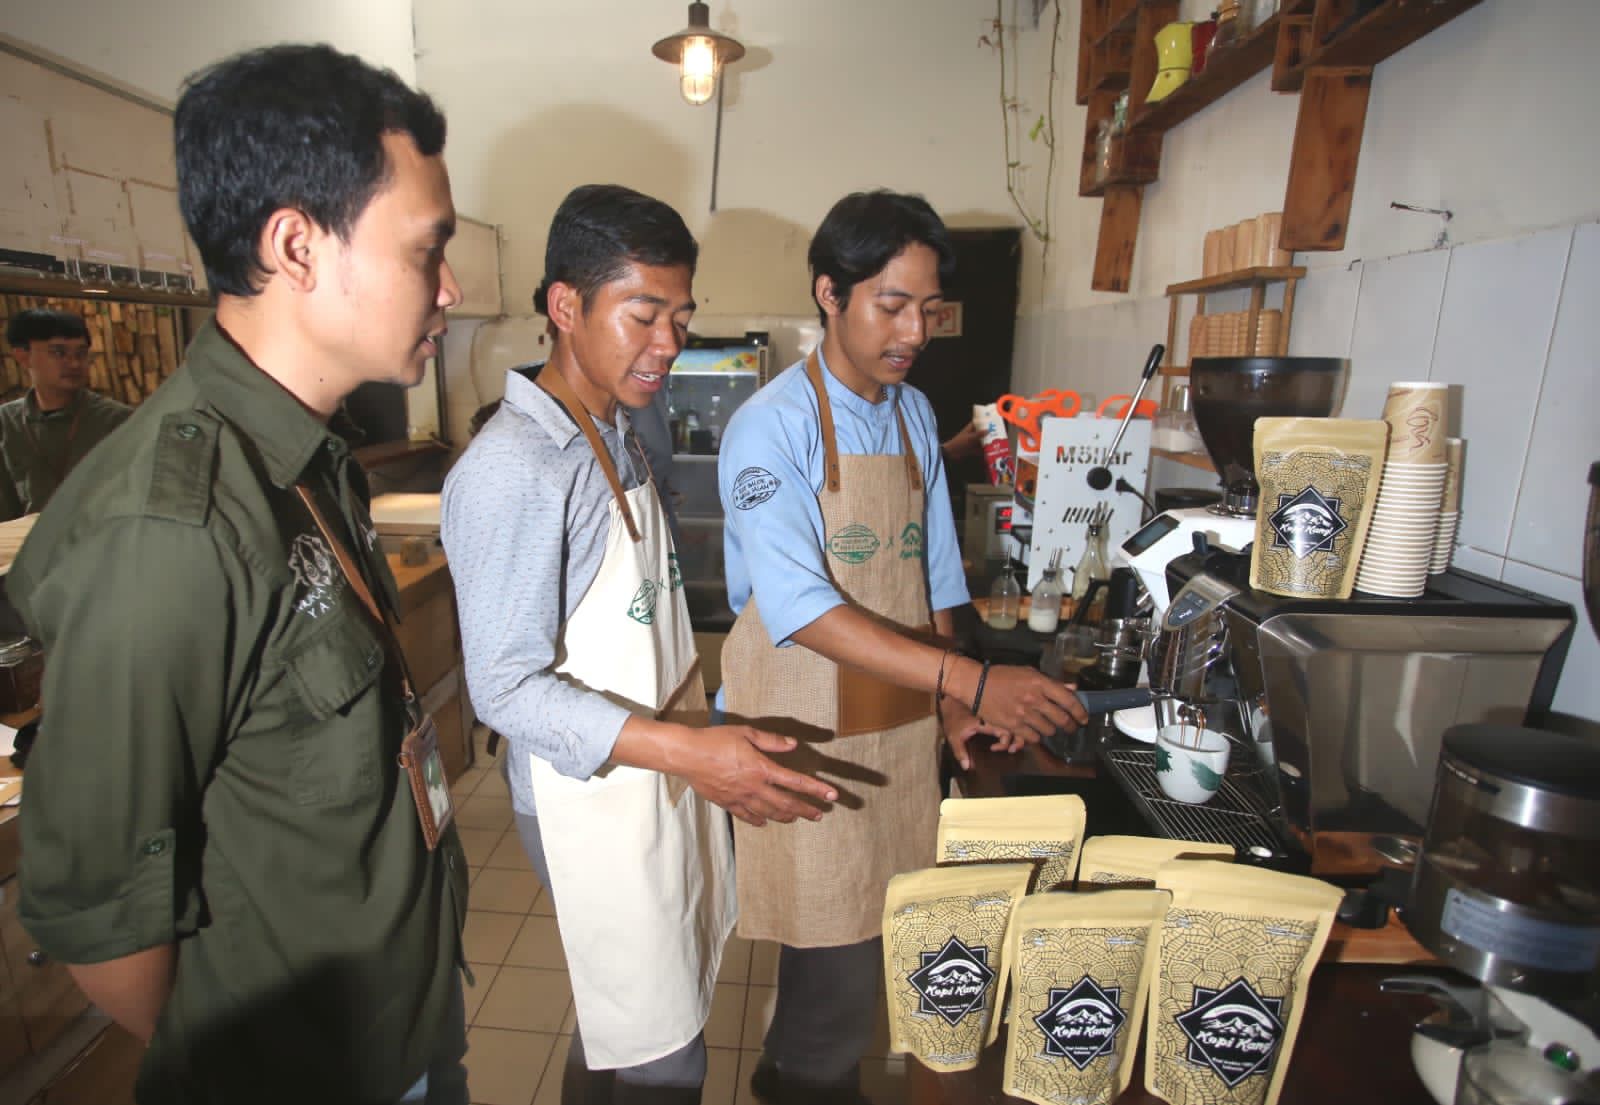  Pertamina Resmikan Cafe Kopi Kang! Program TJSL FT Bandung Group